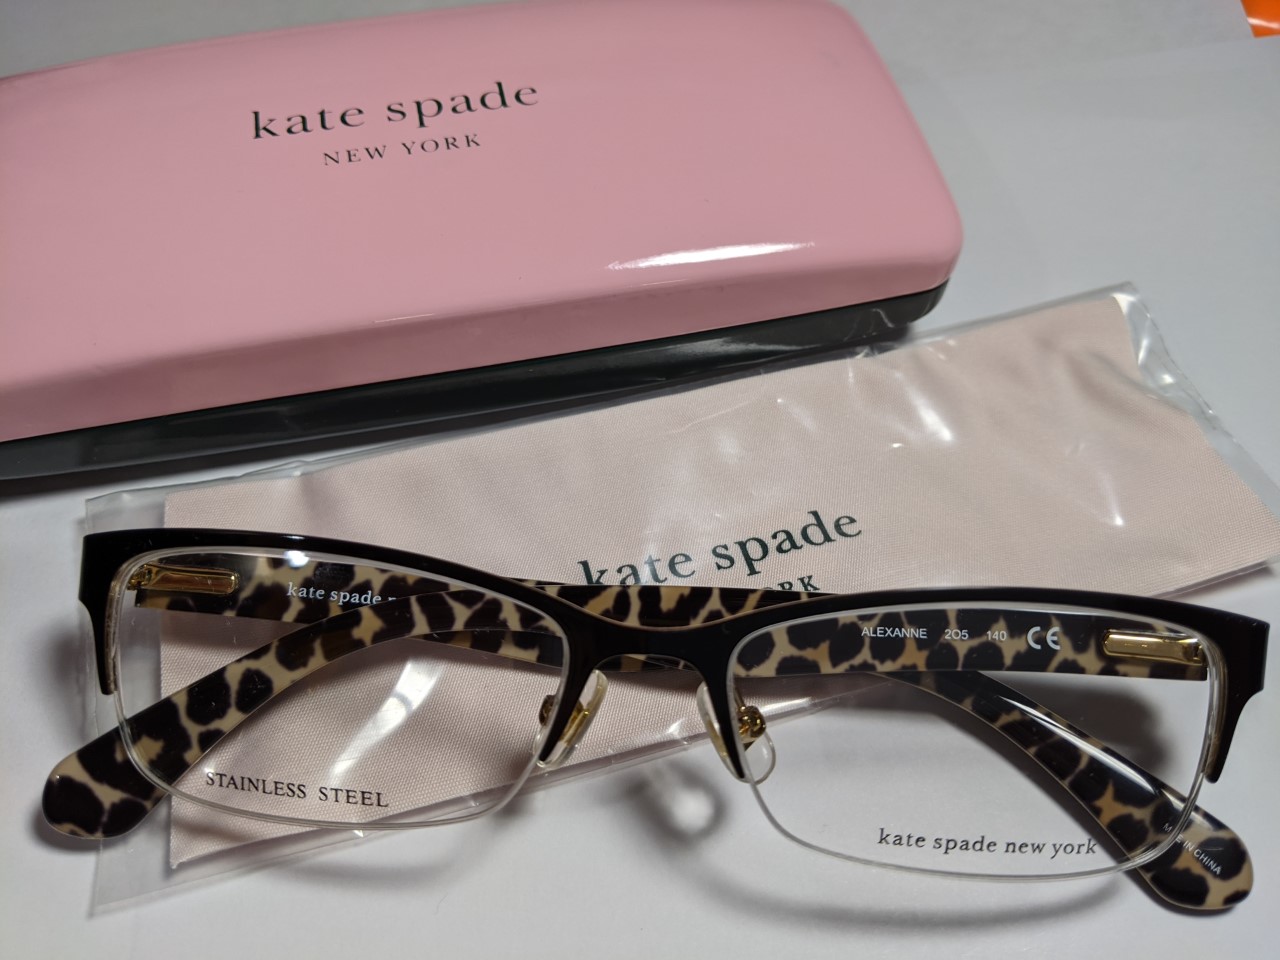 Kate Spade / Alexanne / Eyeglasses - E-Z Optical